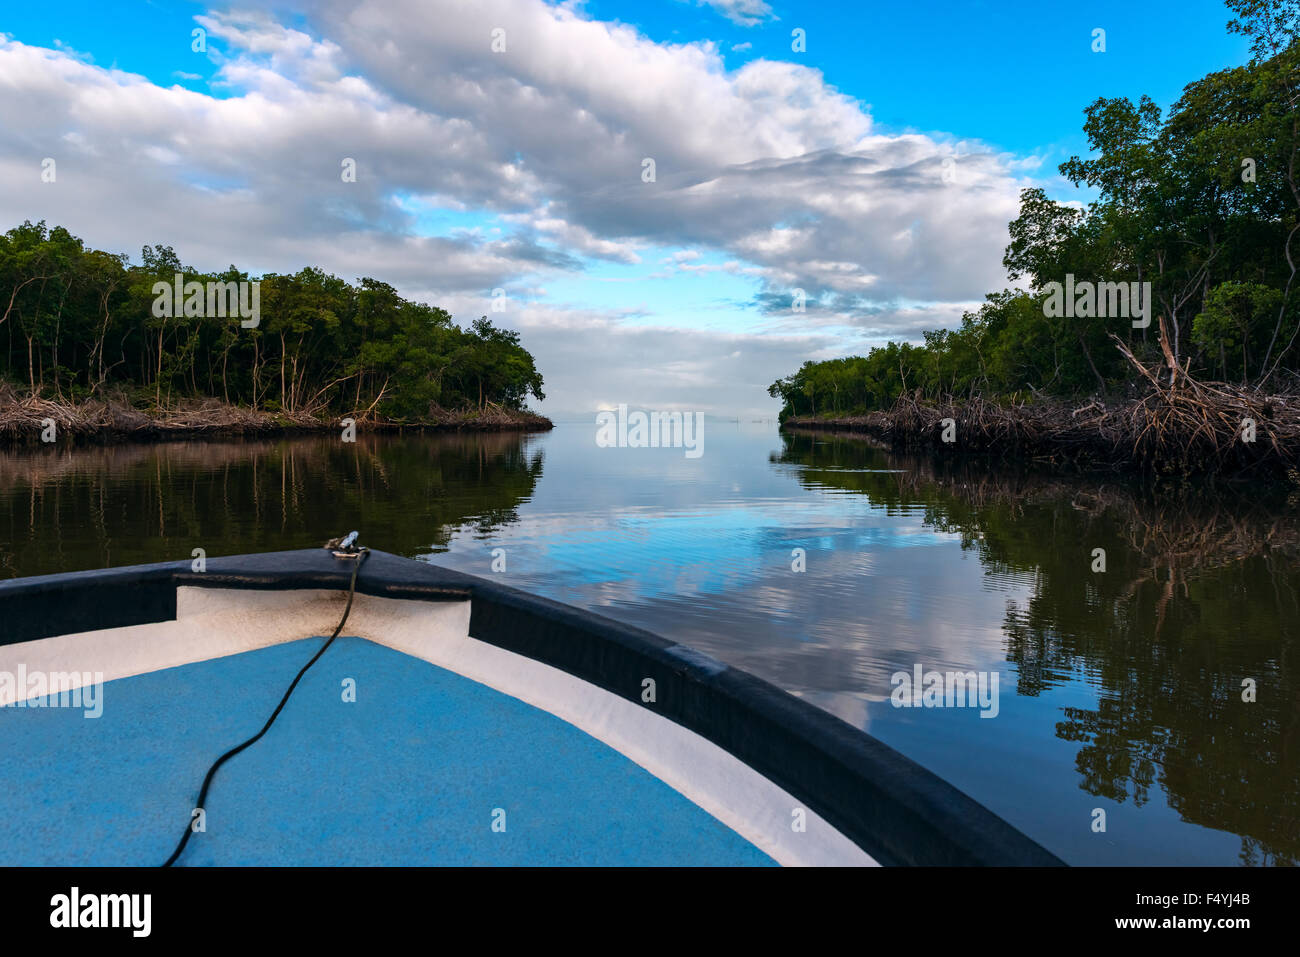 Angeln-Bootsfahrt Mündung des Flusses Caroni Sumpf Trinidad und Tobago Stockfoto